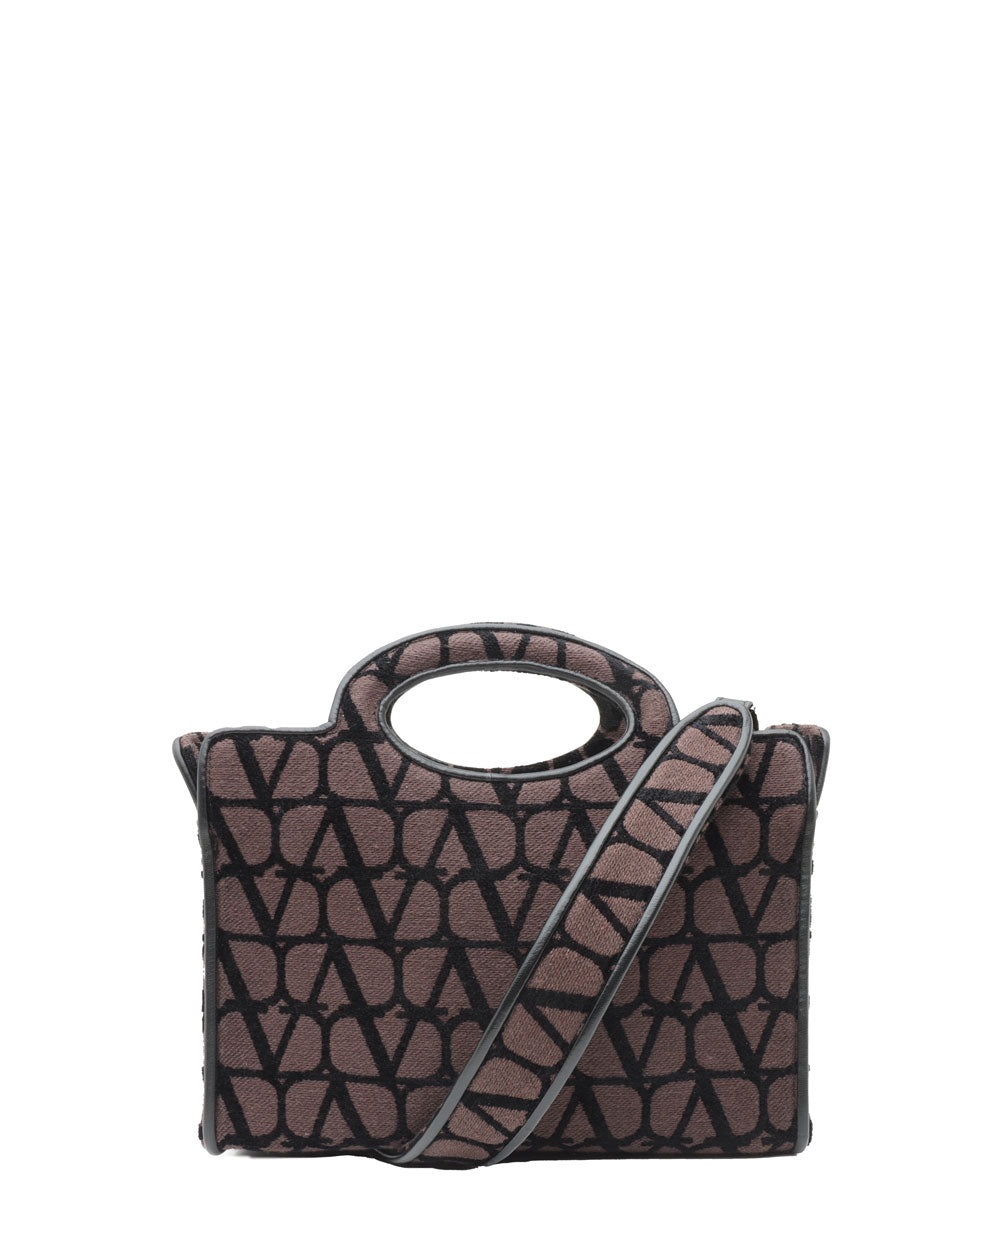 Valentino Garavani Men's Le TROISIEME Toile Iconographe Shopping Bag - Black - Totes